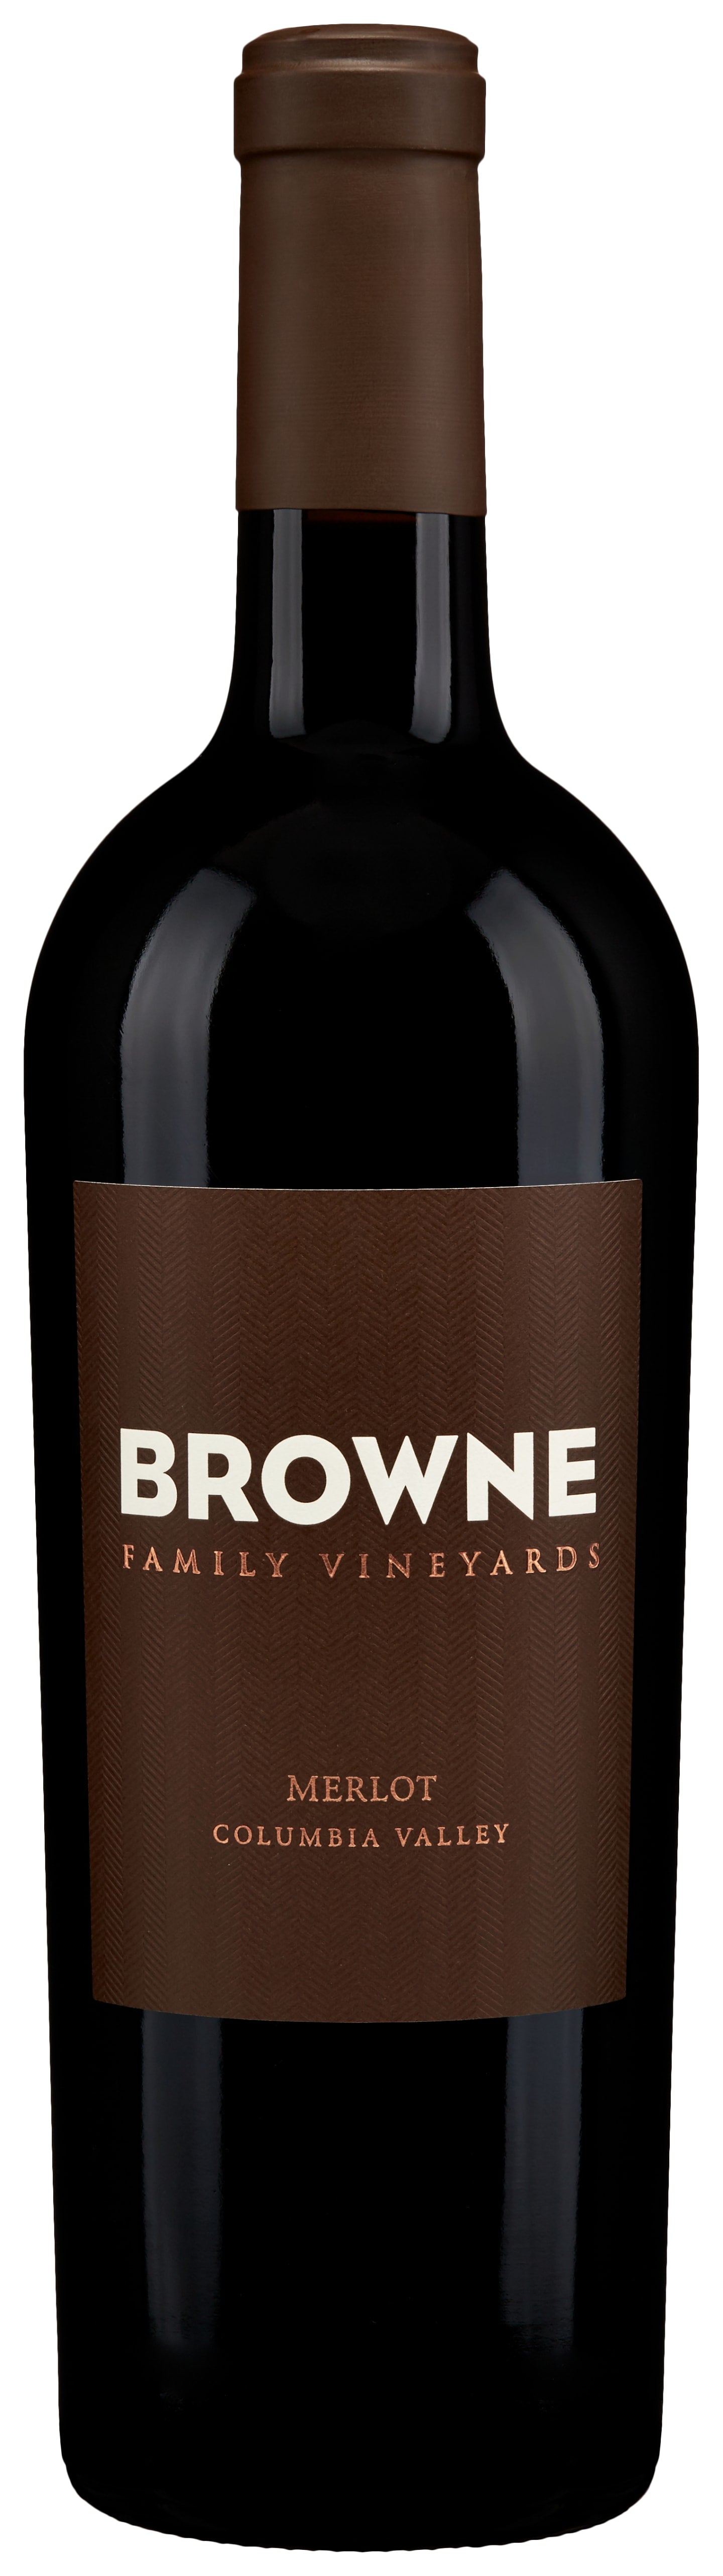 Browne Family Vineyards Merlot 2013